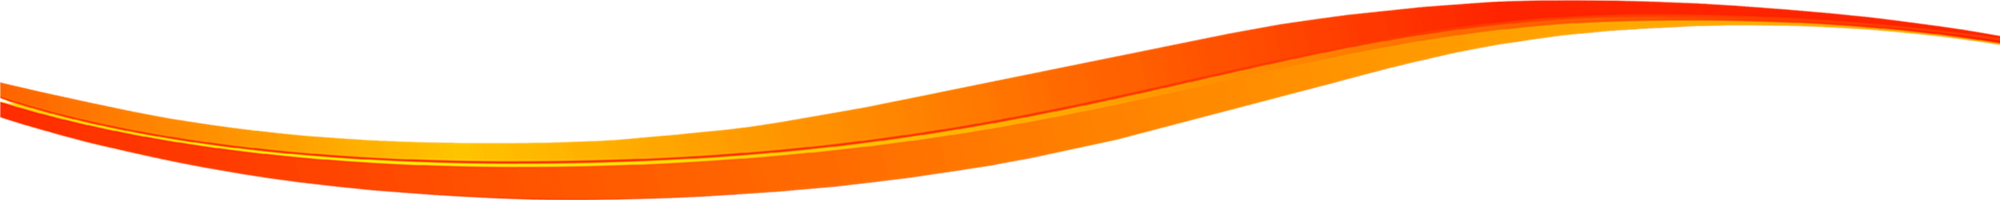 Orange Building Communities Awards - Orange Wave Line Png (2000x200)